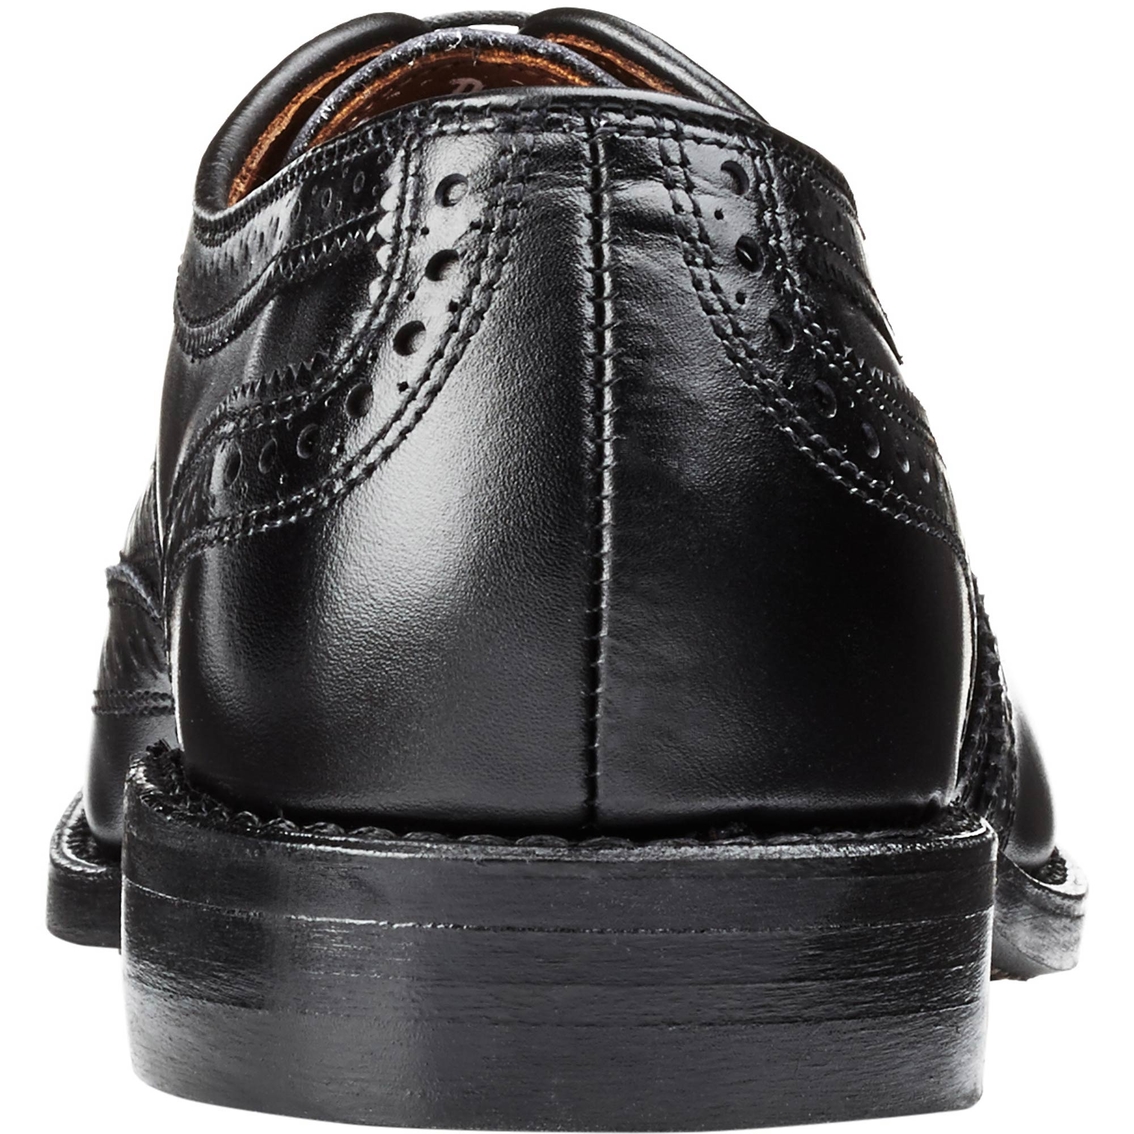 Allen Edmonds McAllister Shoes - Image 4 of 5